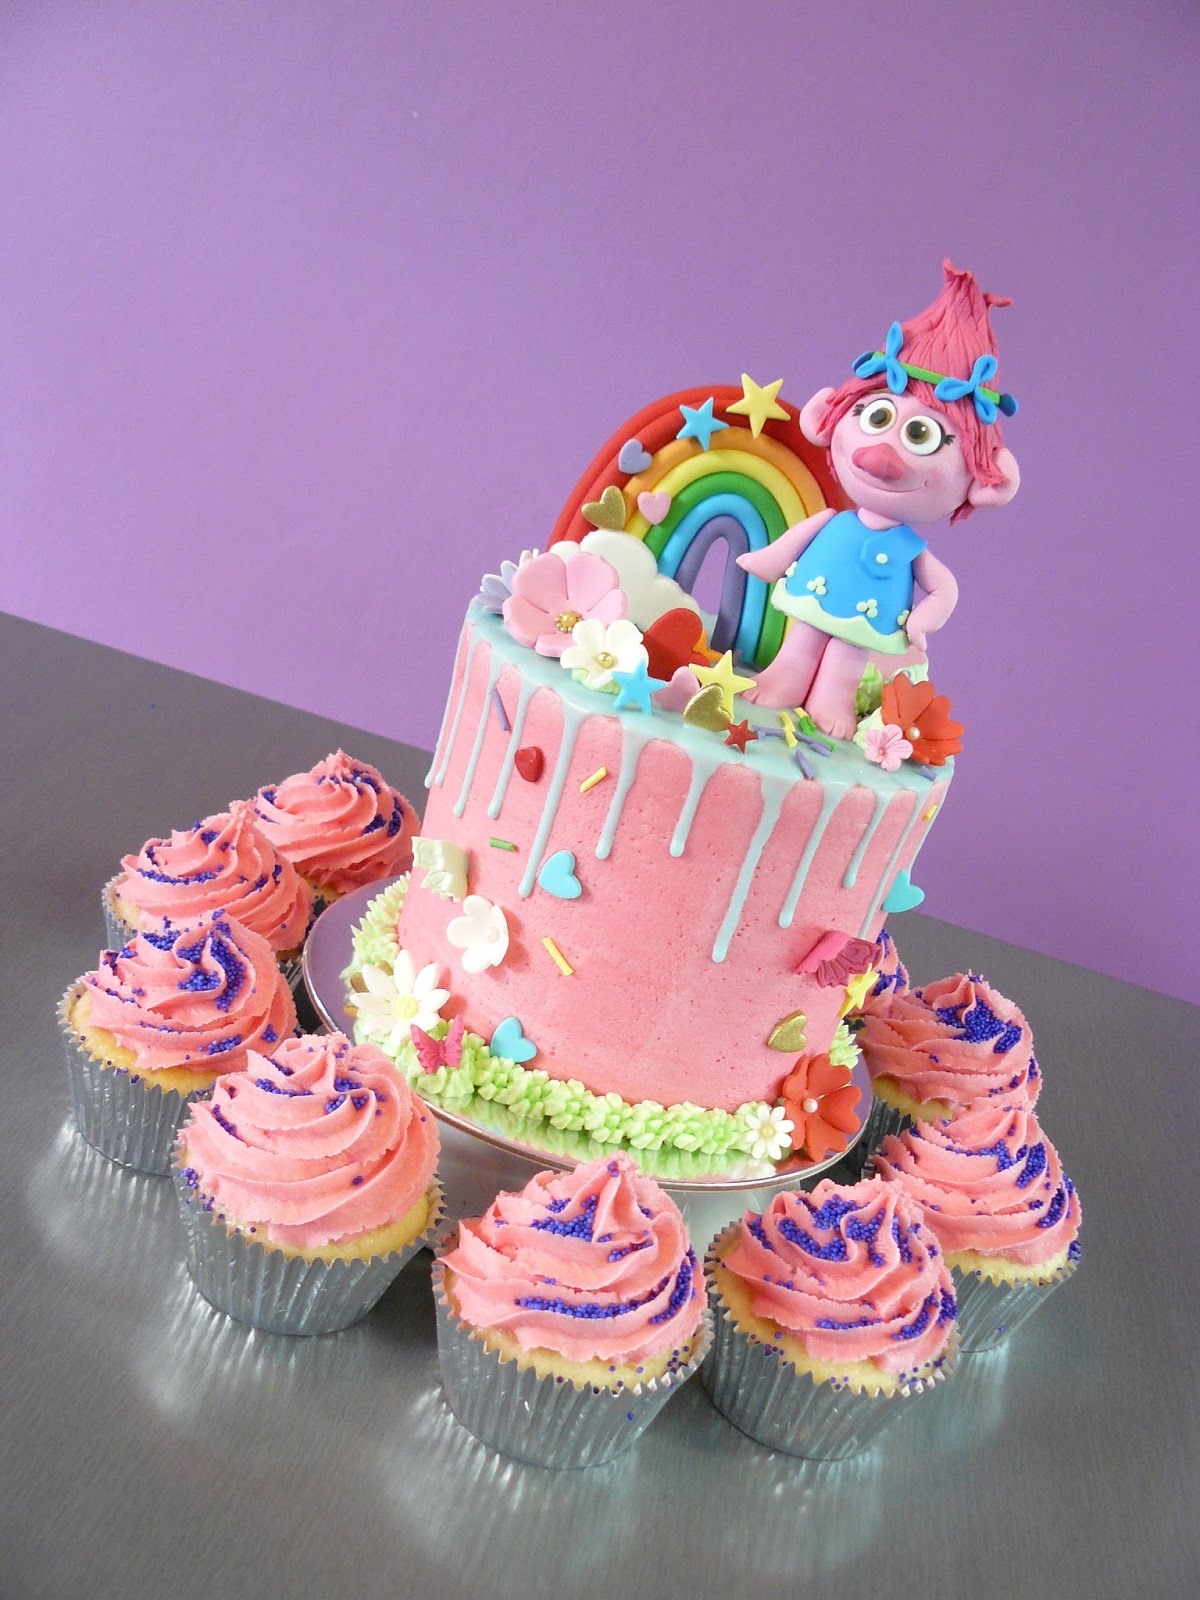 the-cup-cake-taste-brisbane-cupcakes-princess-poppy-cake